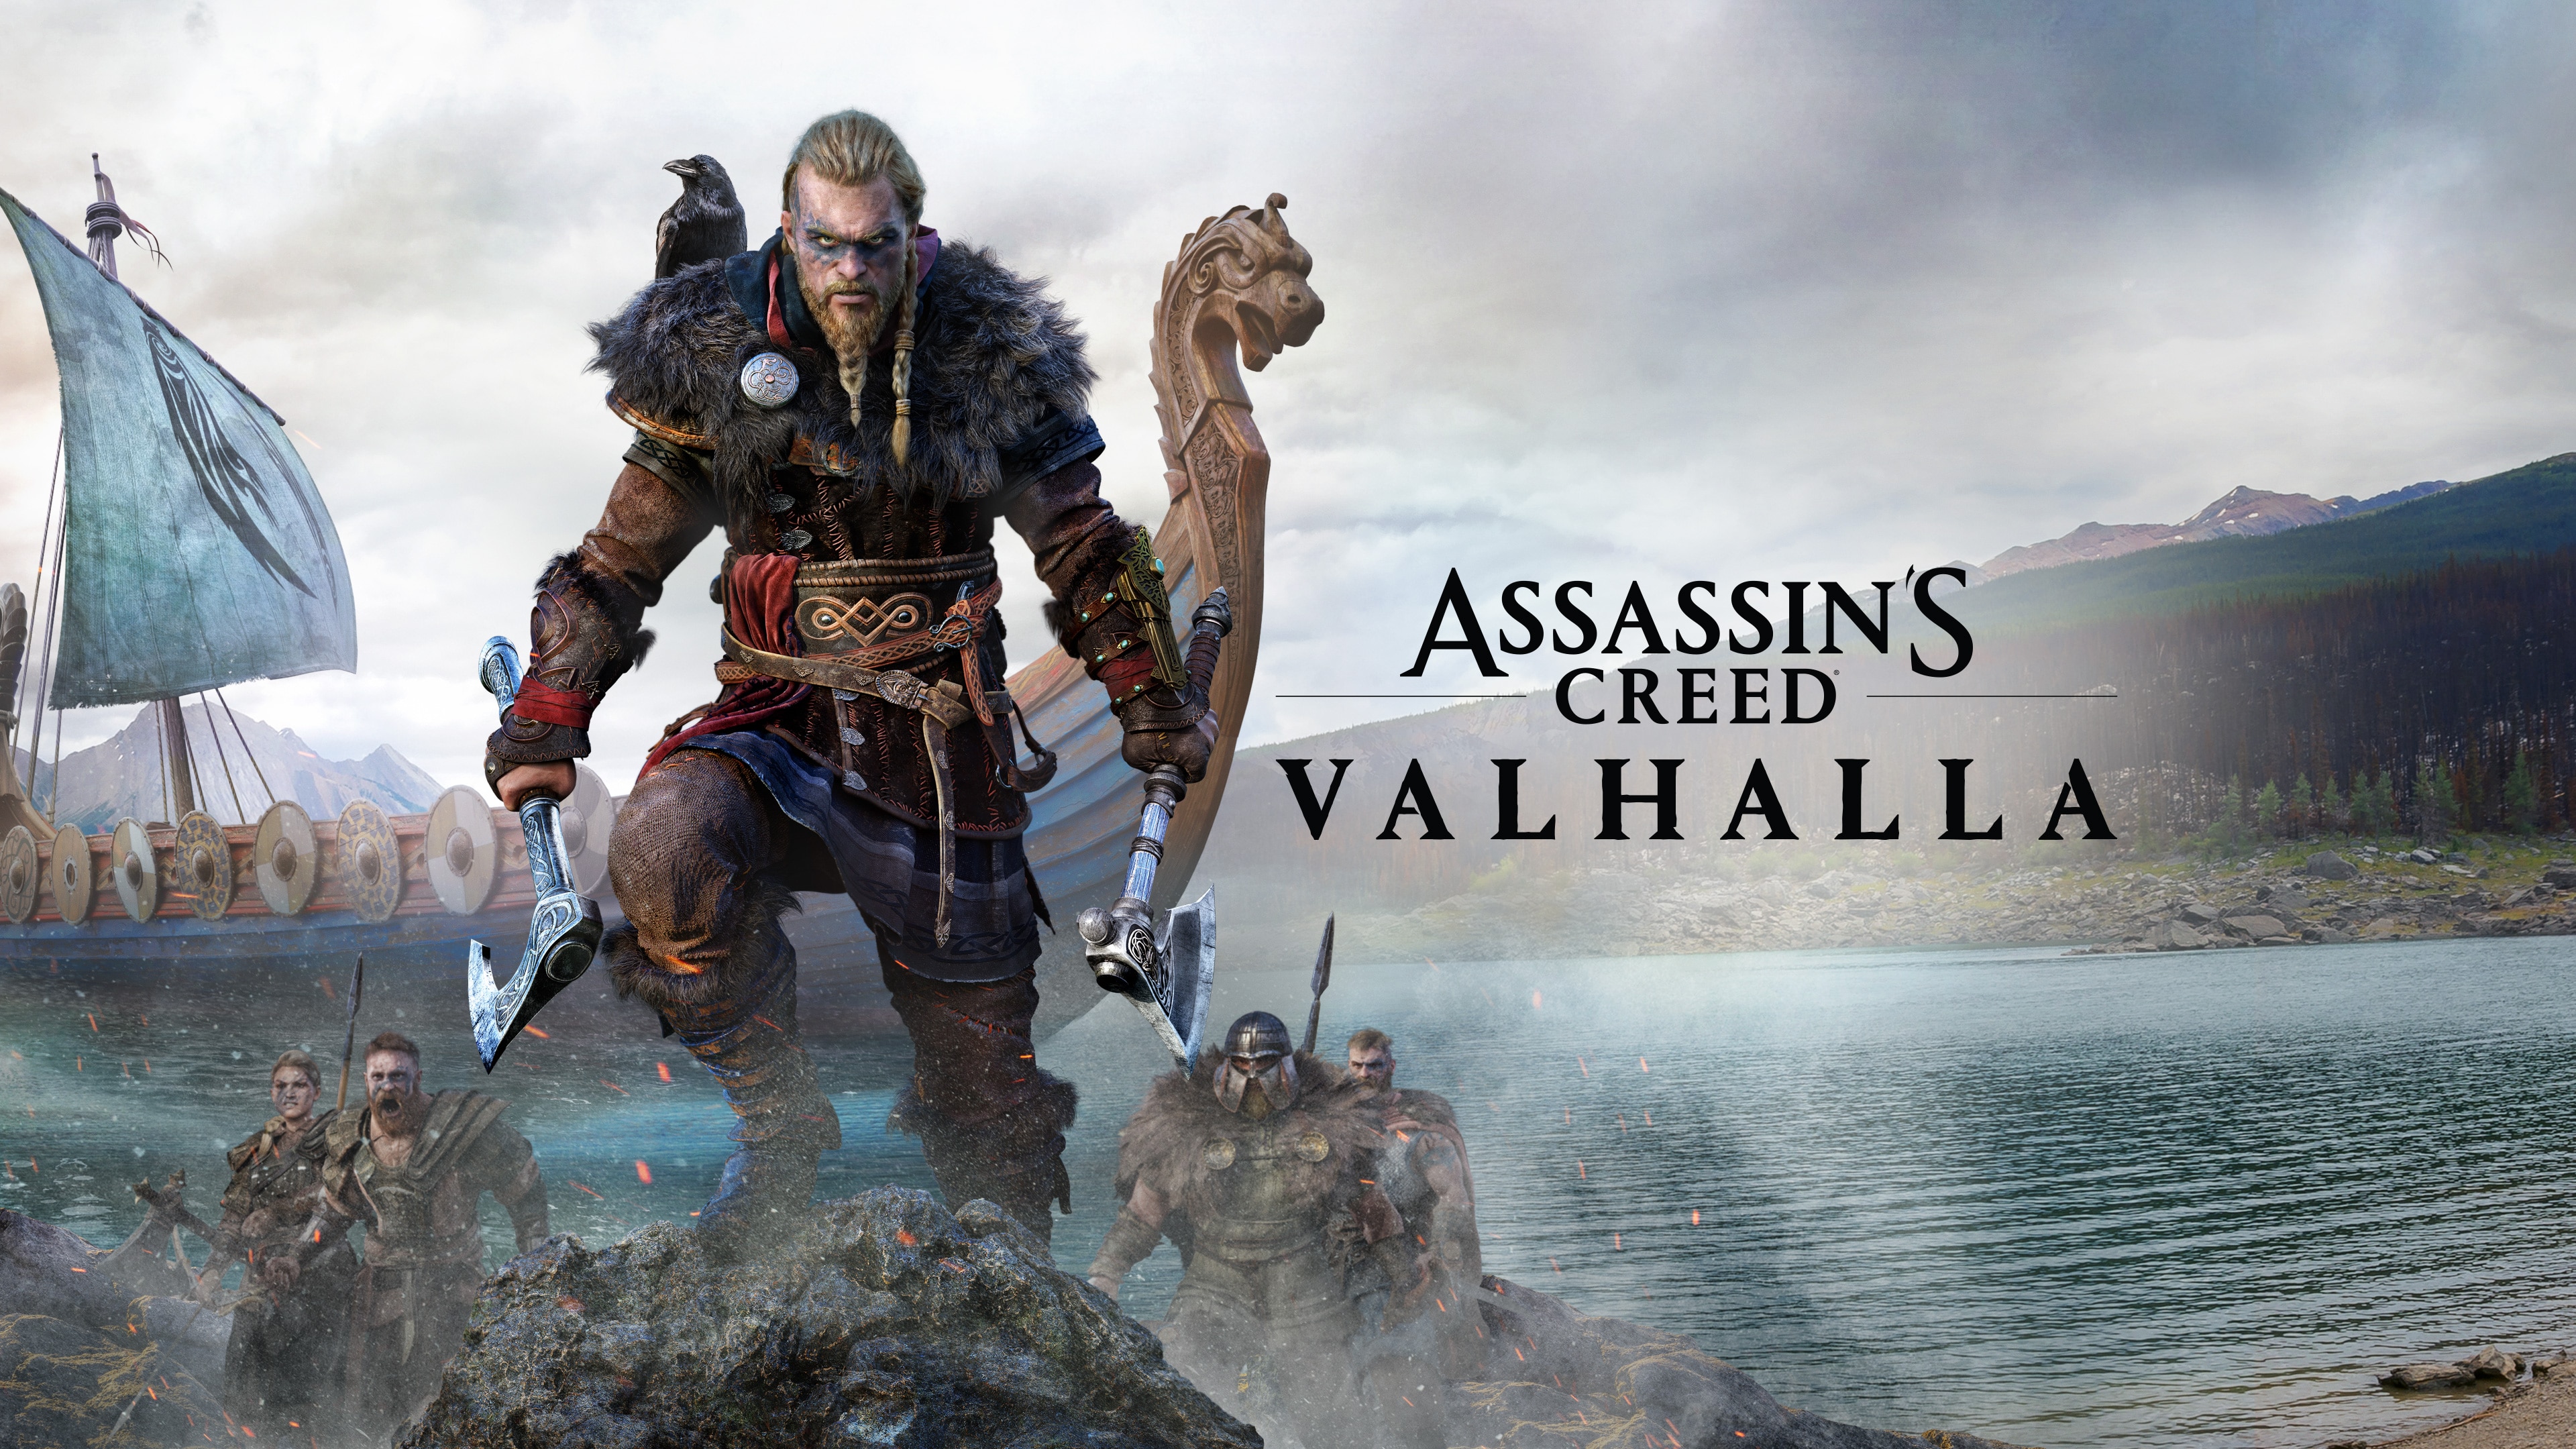 assassins creed valhalla free download